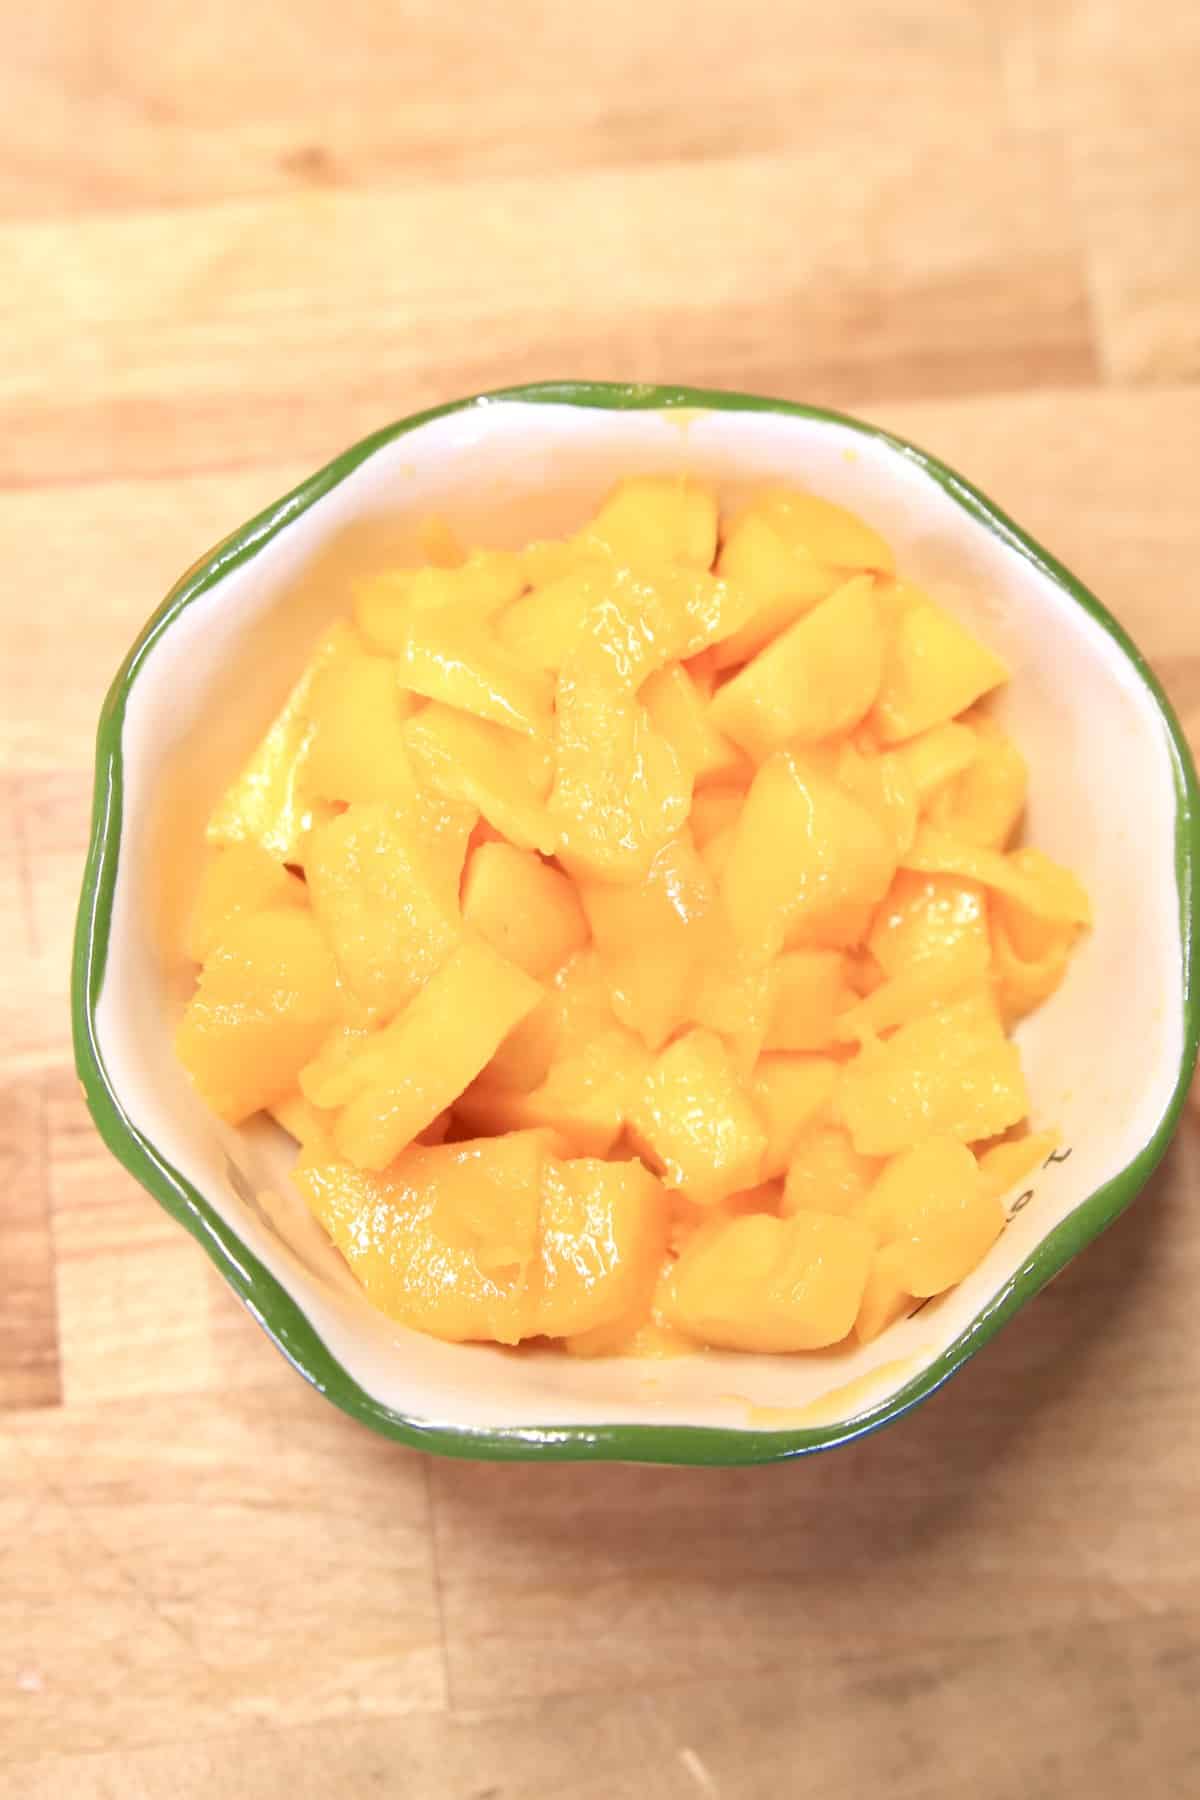 Diced mango in a bowl.